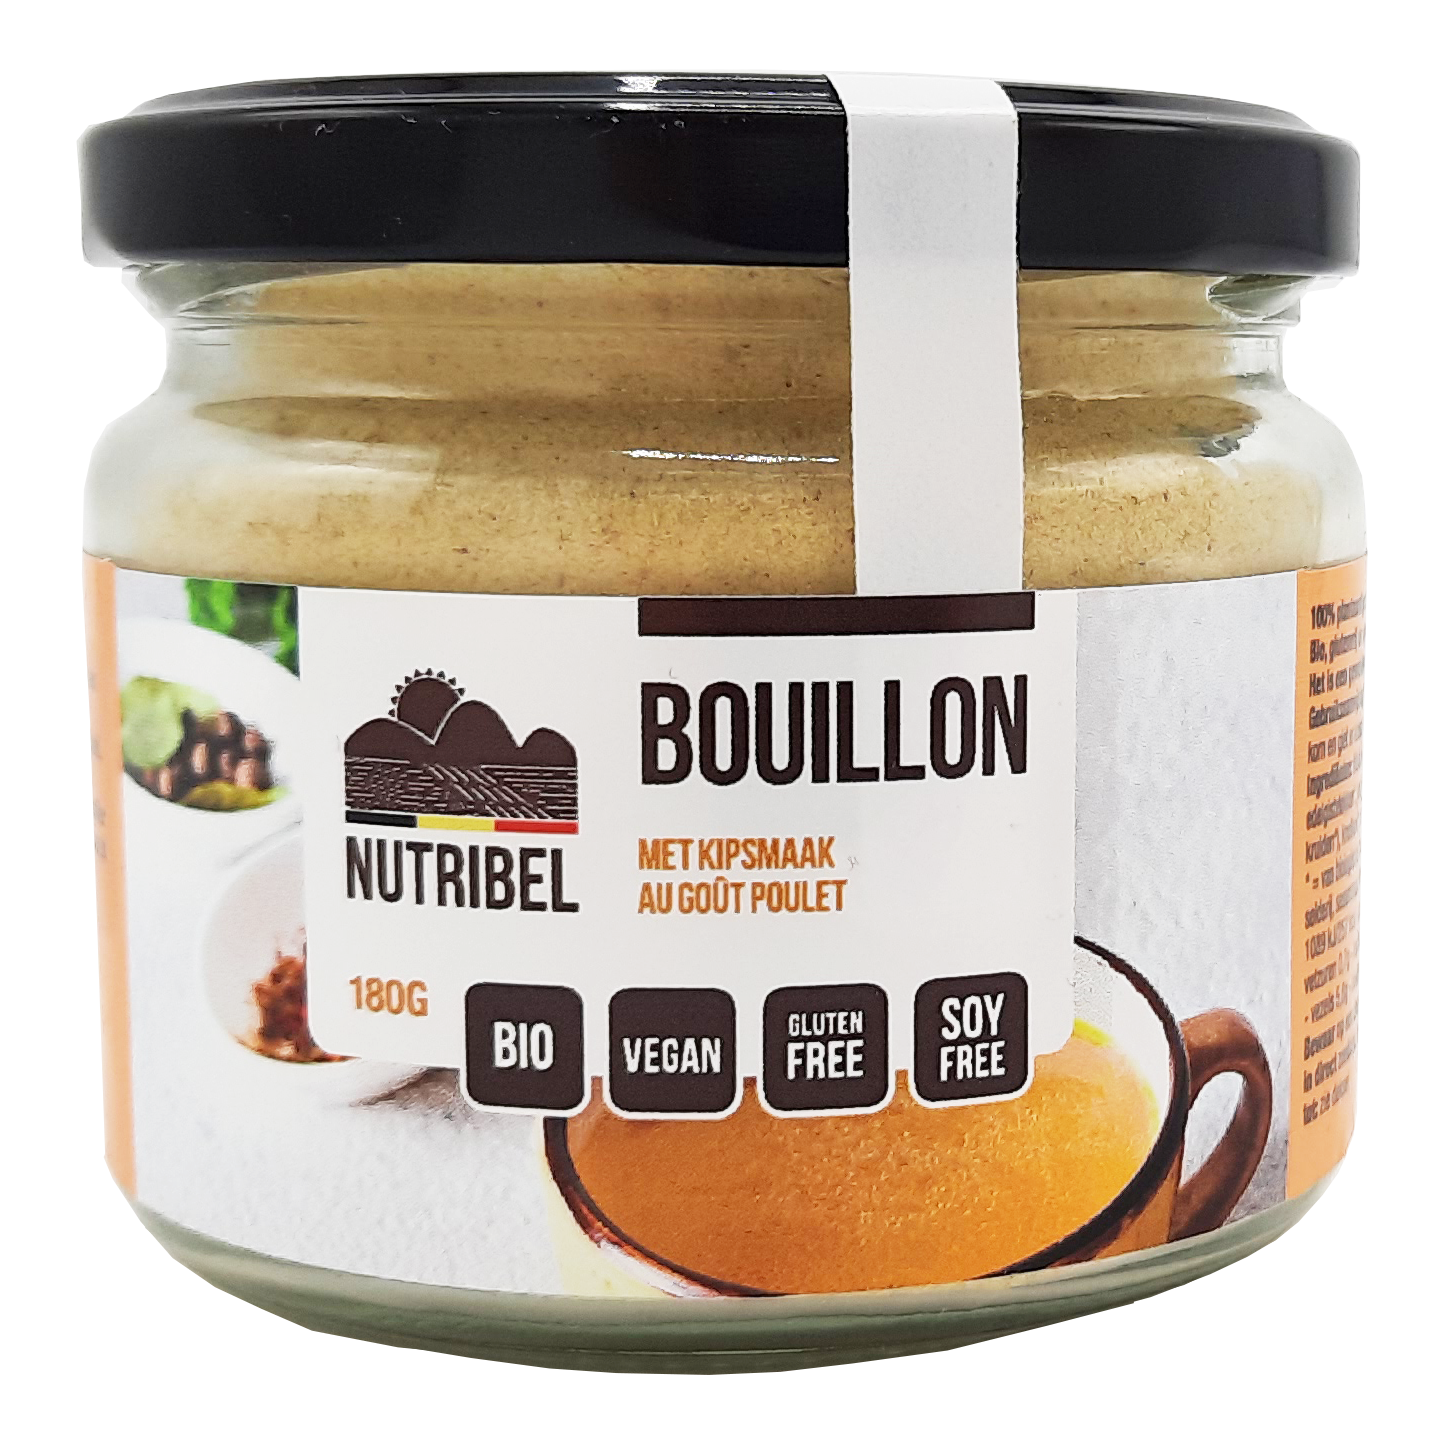 Nutribel Bouillon kipsmaak vegan bio 180g